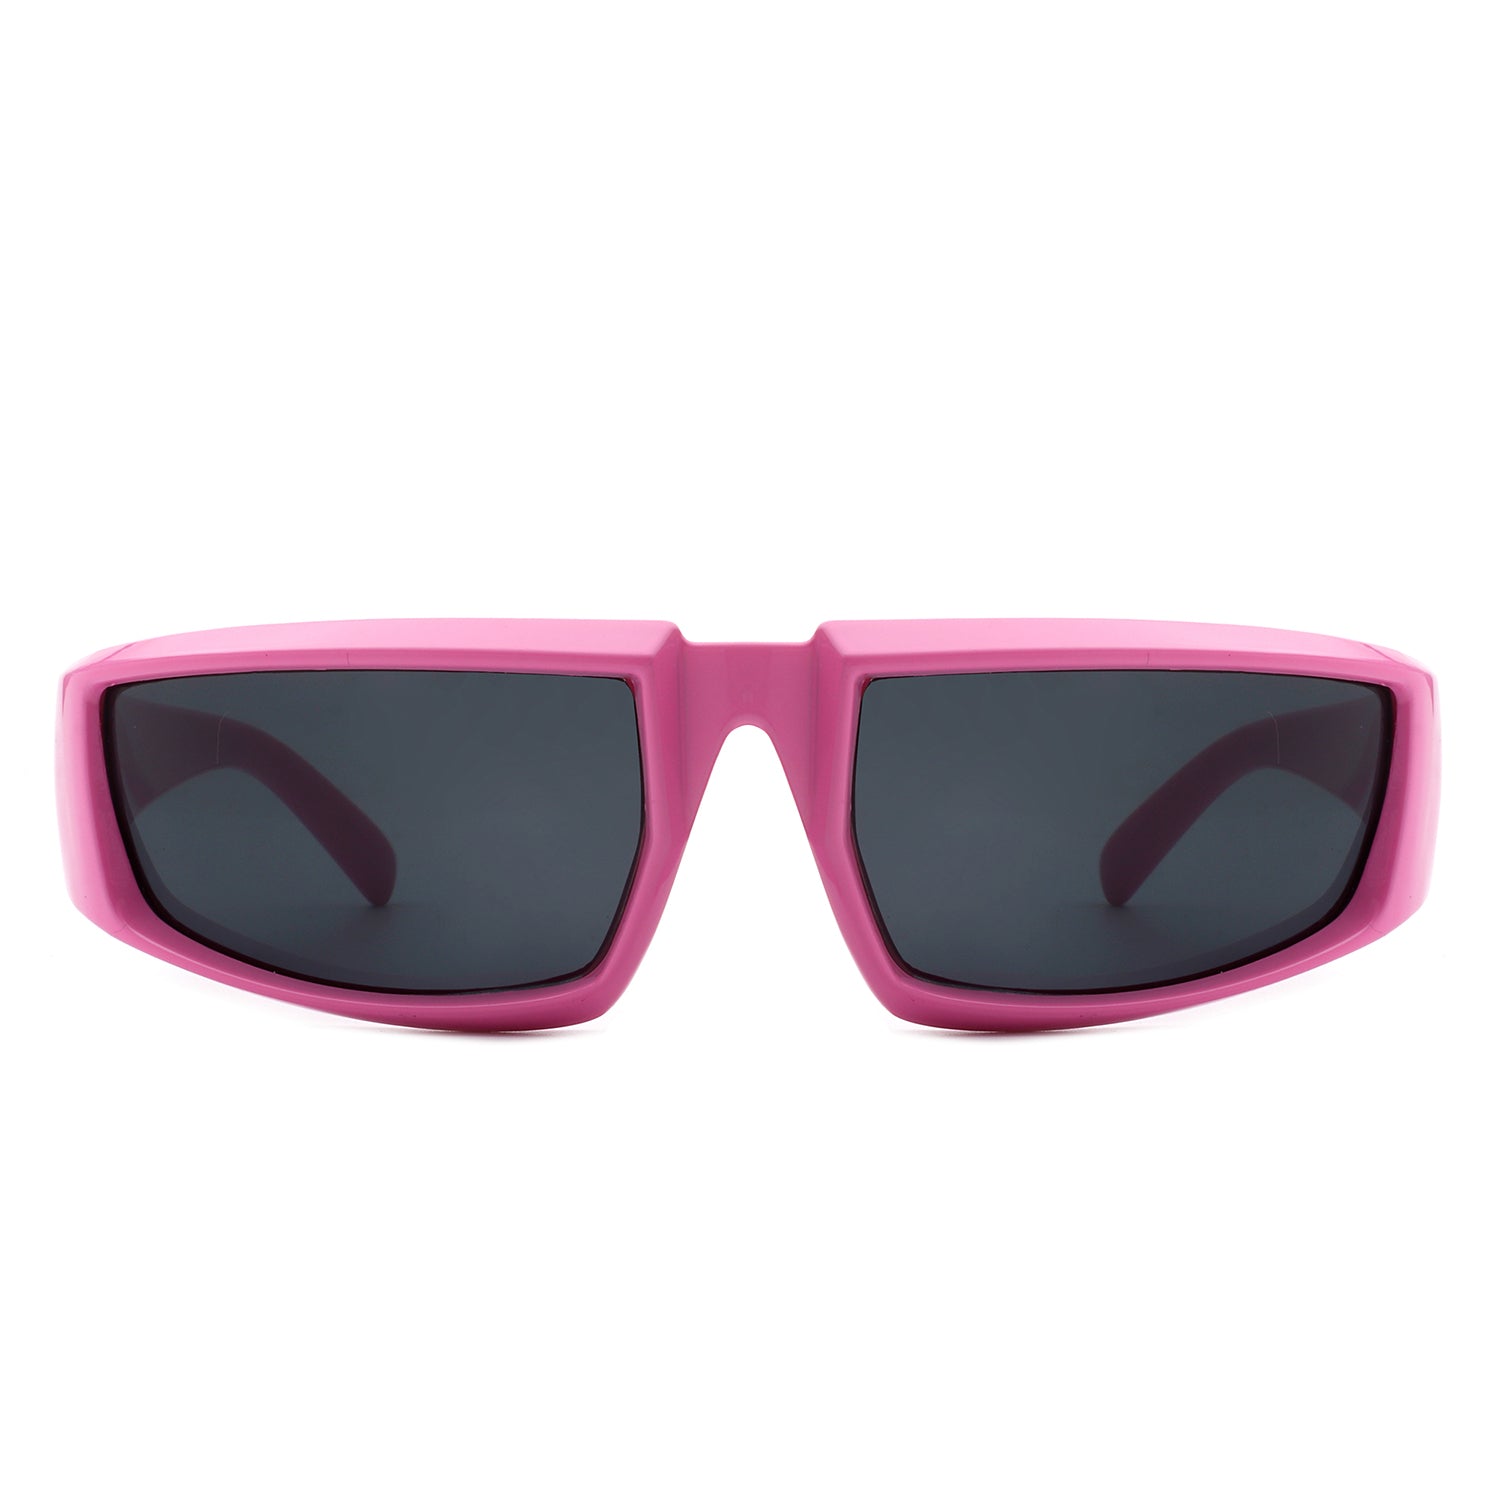 HS1167 - Retro Rectangle Wrap Around Fashion Sports Sunglasses